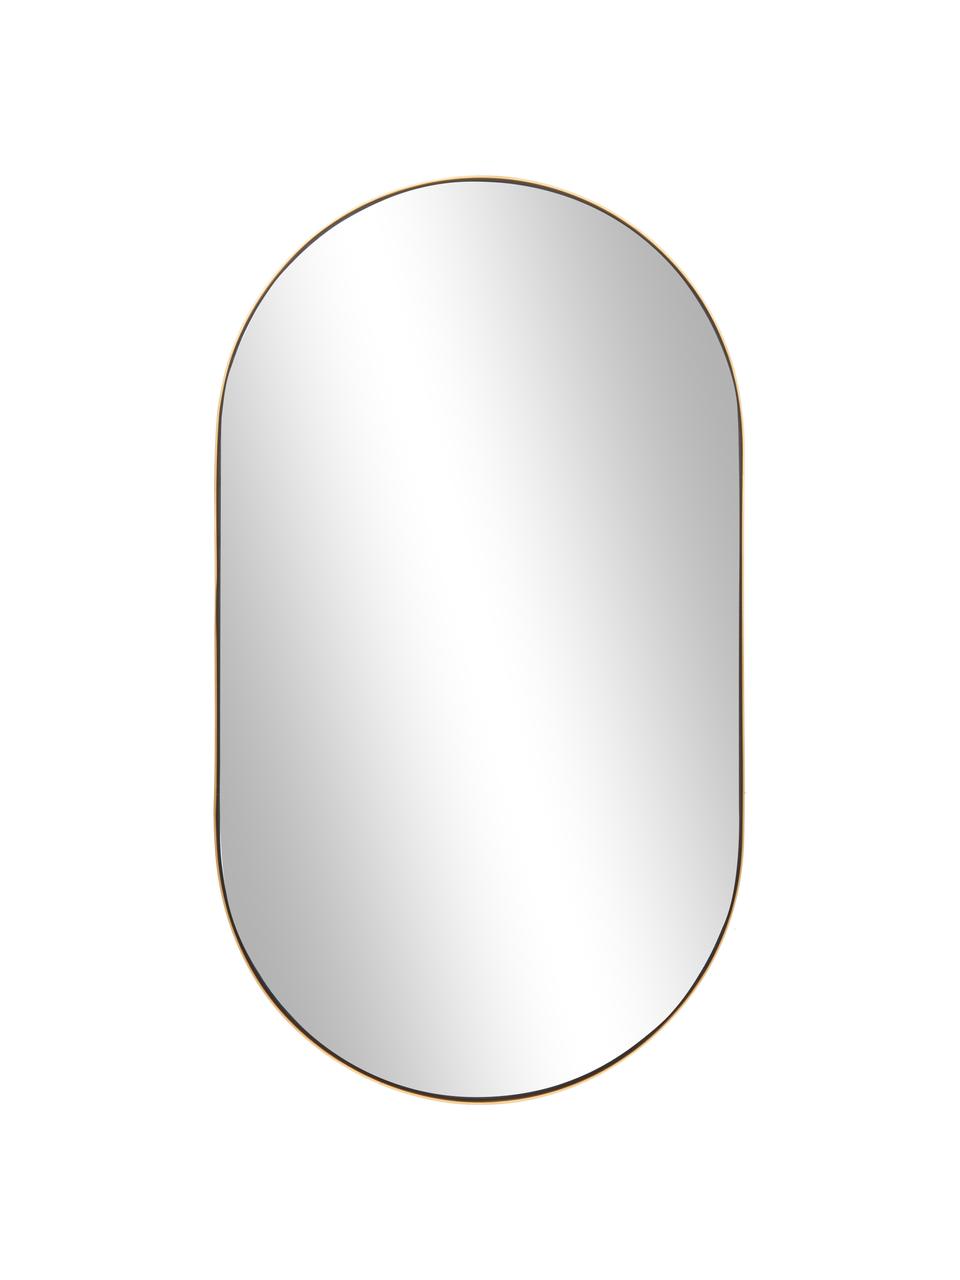 Nástěnné zrcadlo s kovovým rámem Lucia, Zlatá, Š 40 cm, V 70 cm